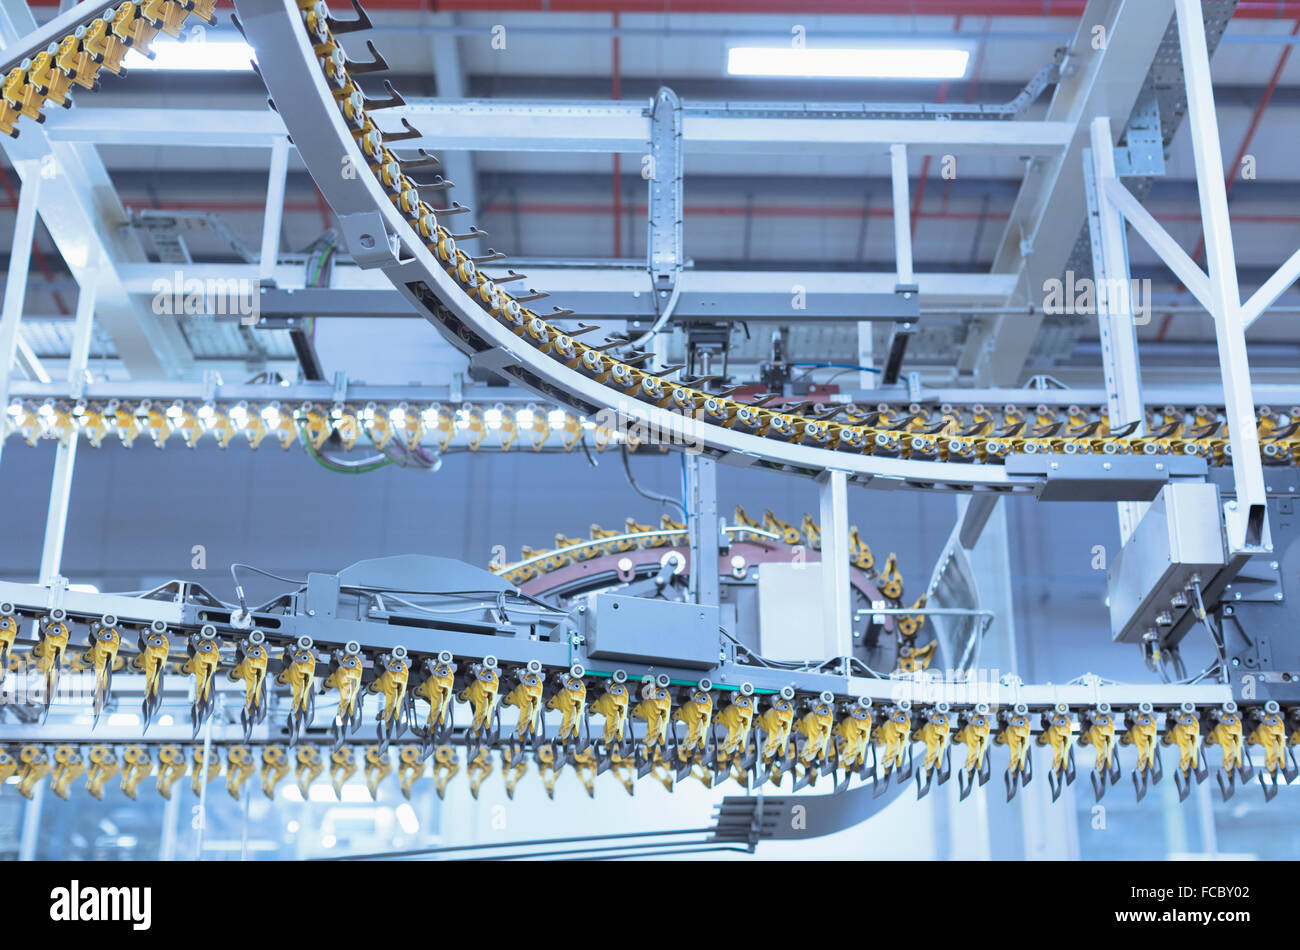 Printing press conveyor belts overhead Stock Photo